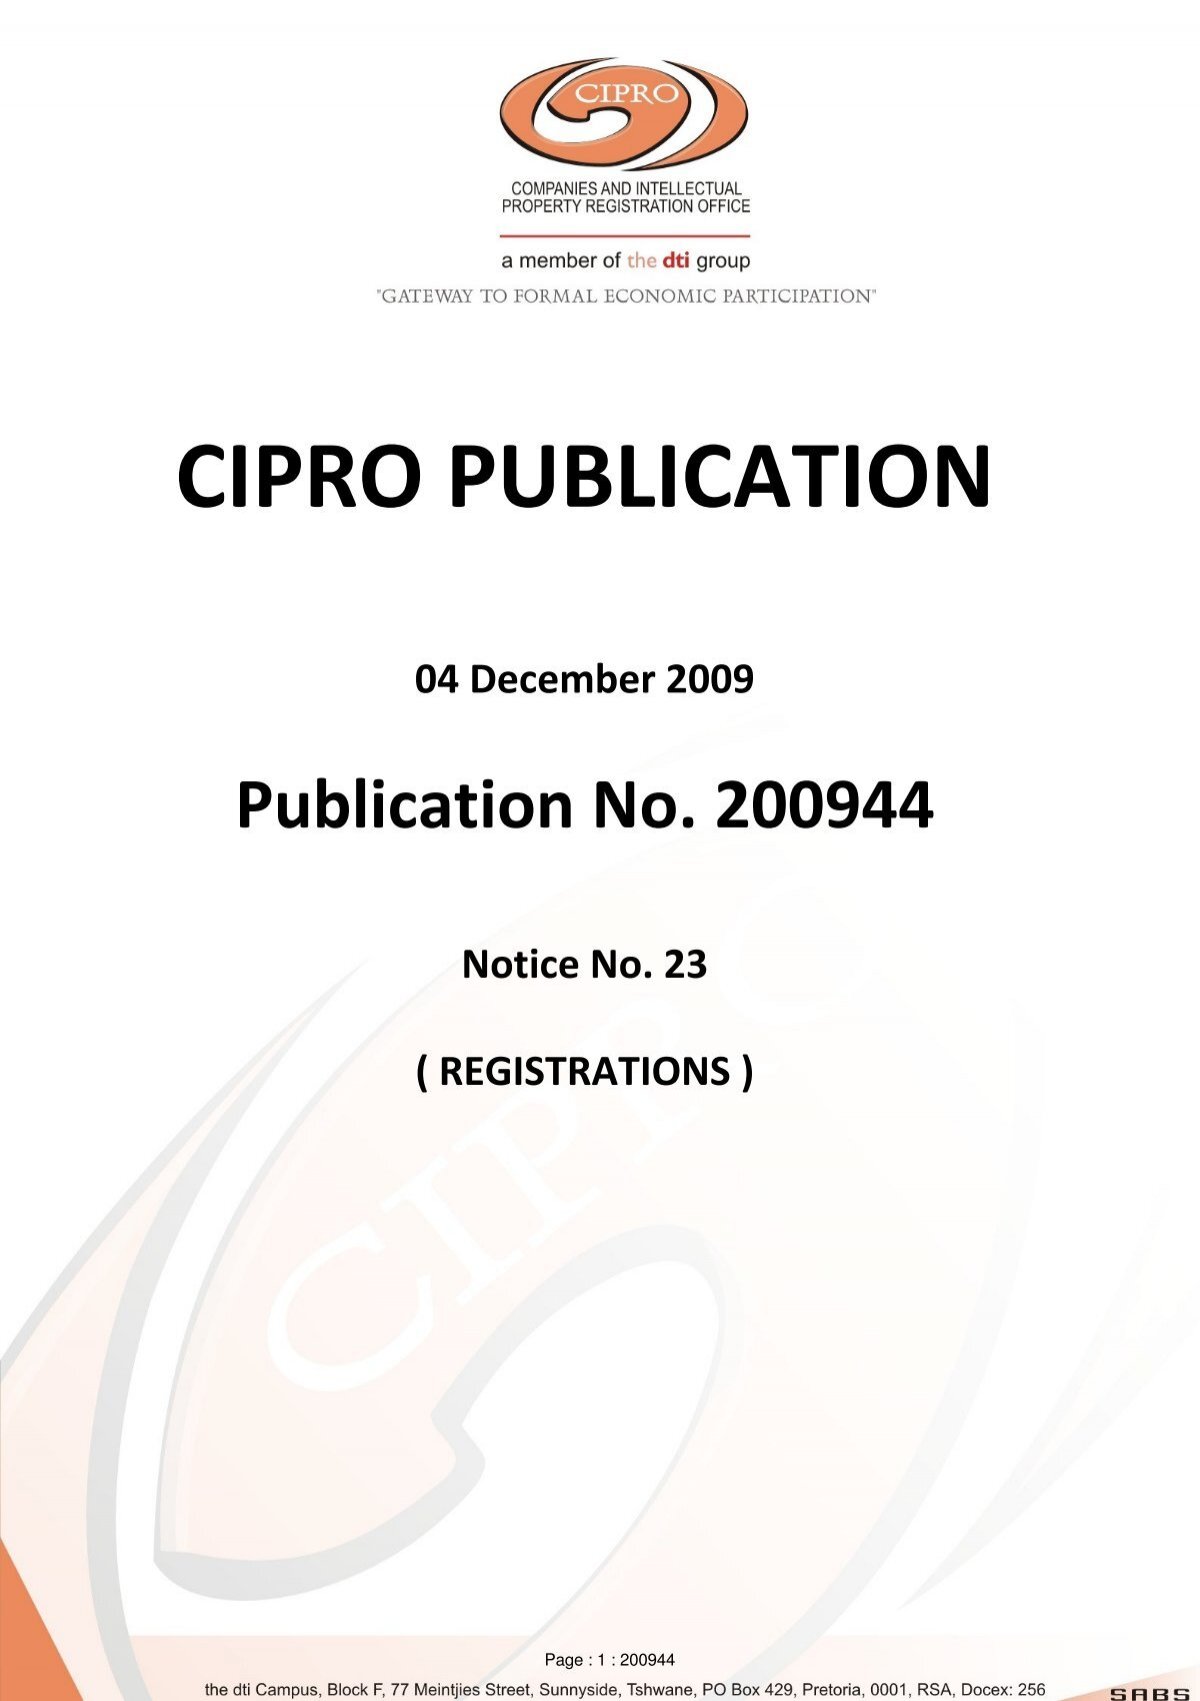 CIPRO PUBLICATION - Cipc